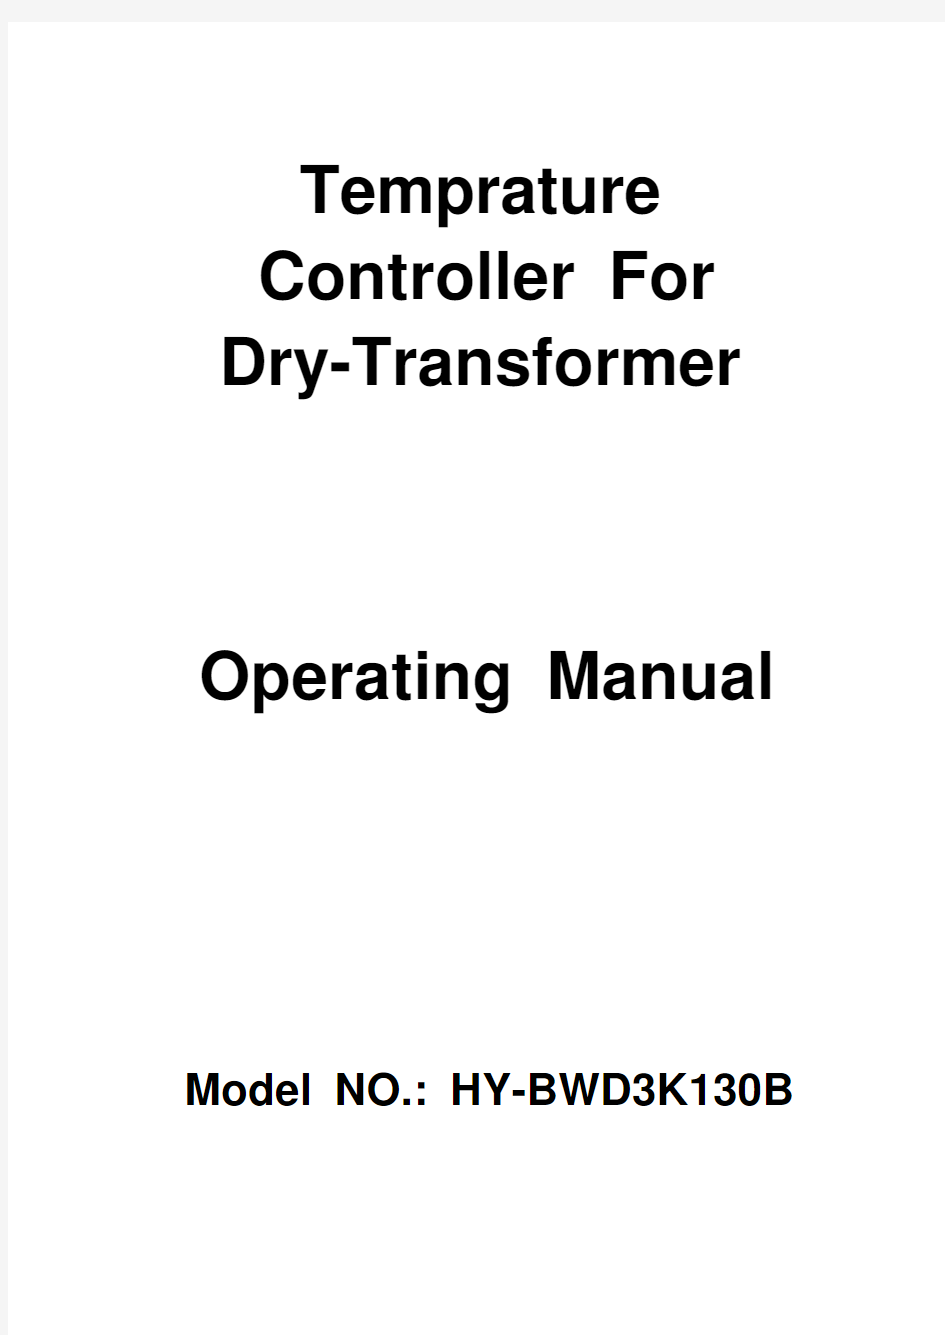 华鹰温控器说明书Temperature Controller Manual - HY-BWD130B